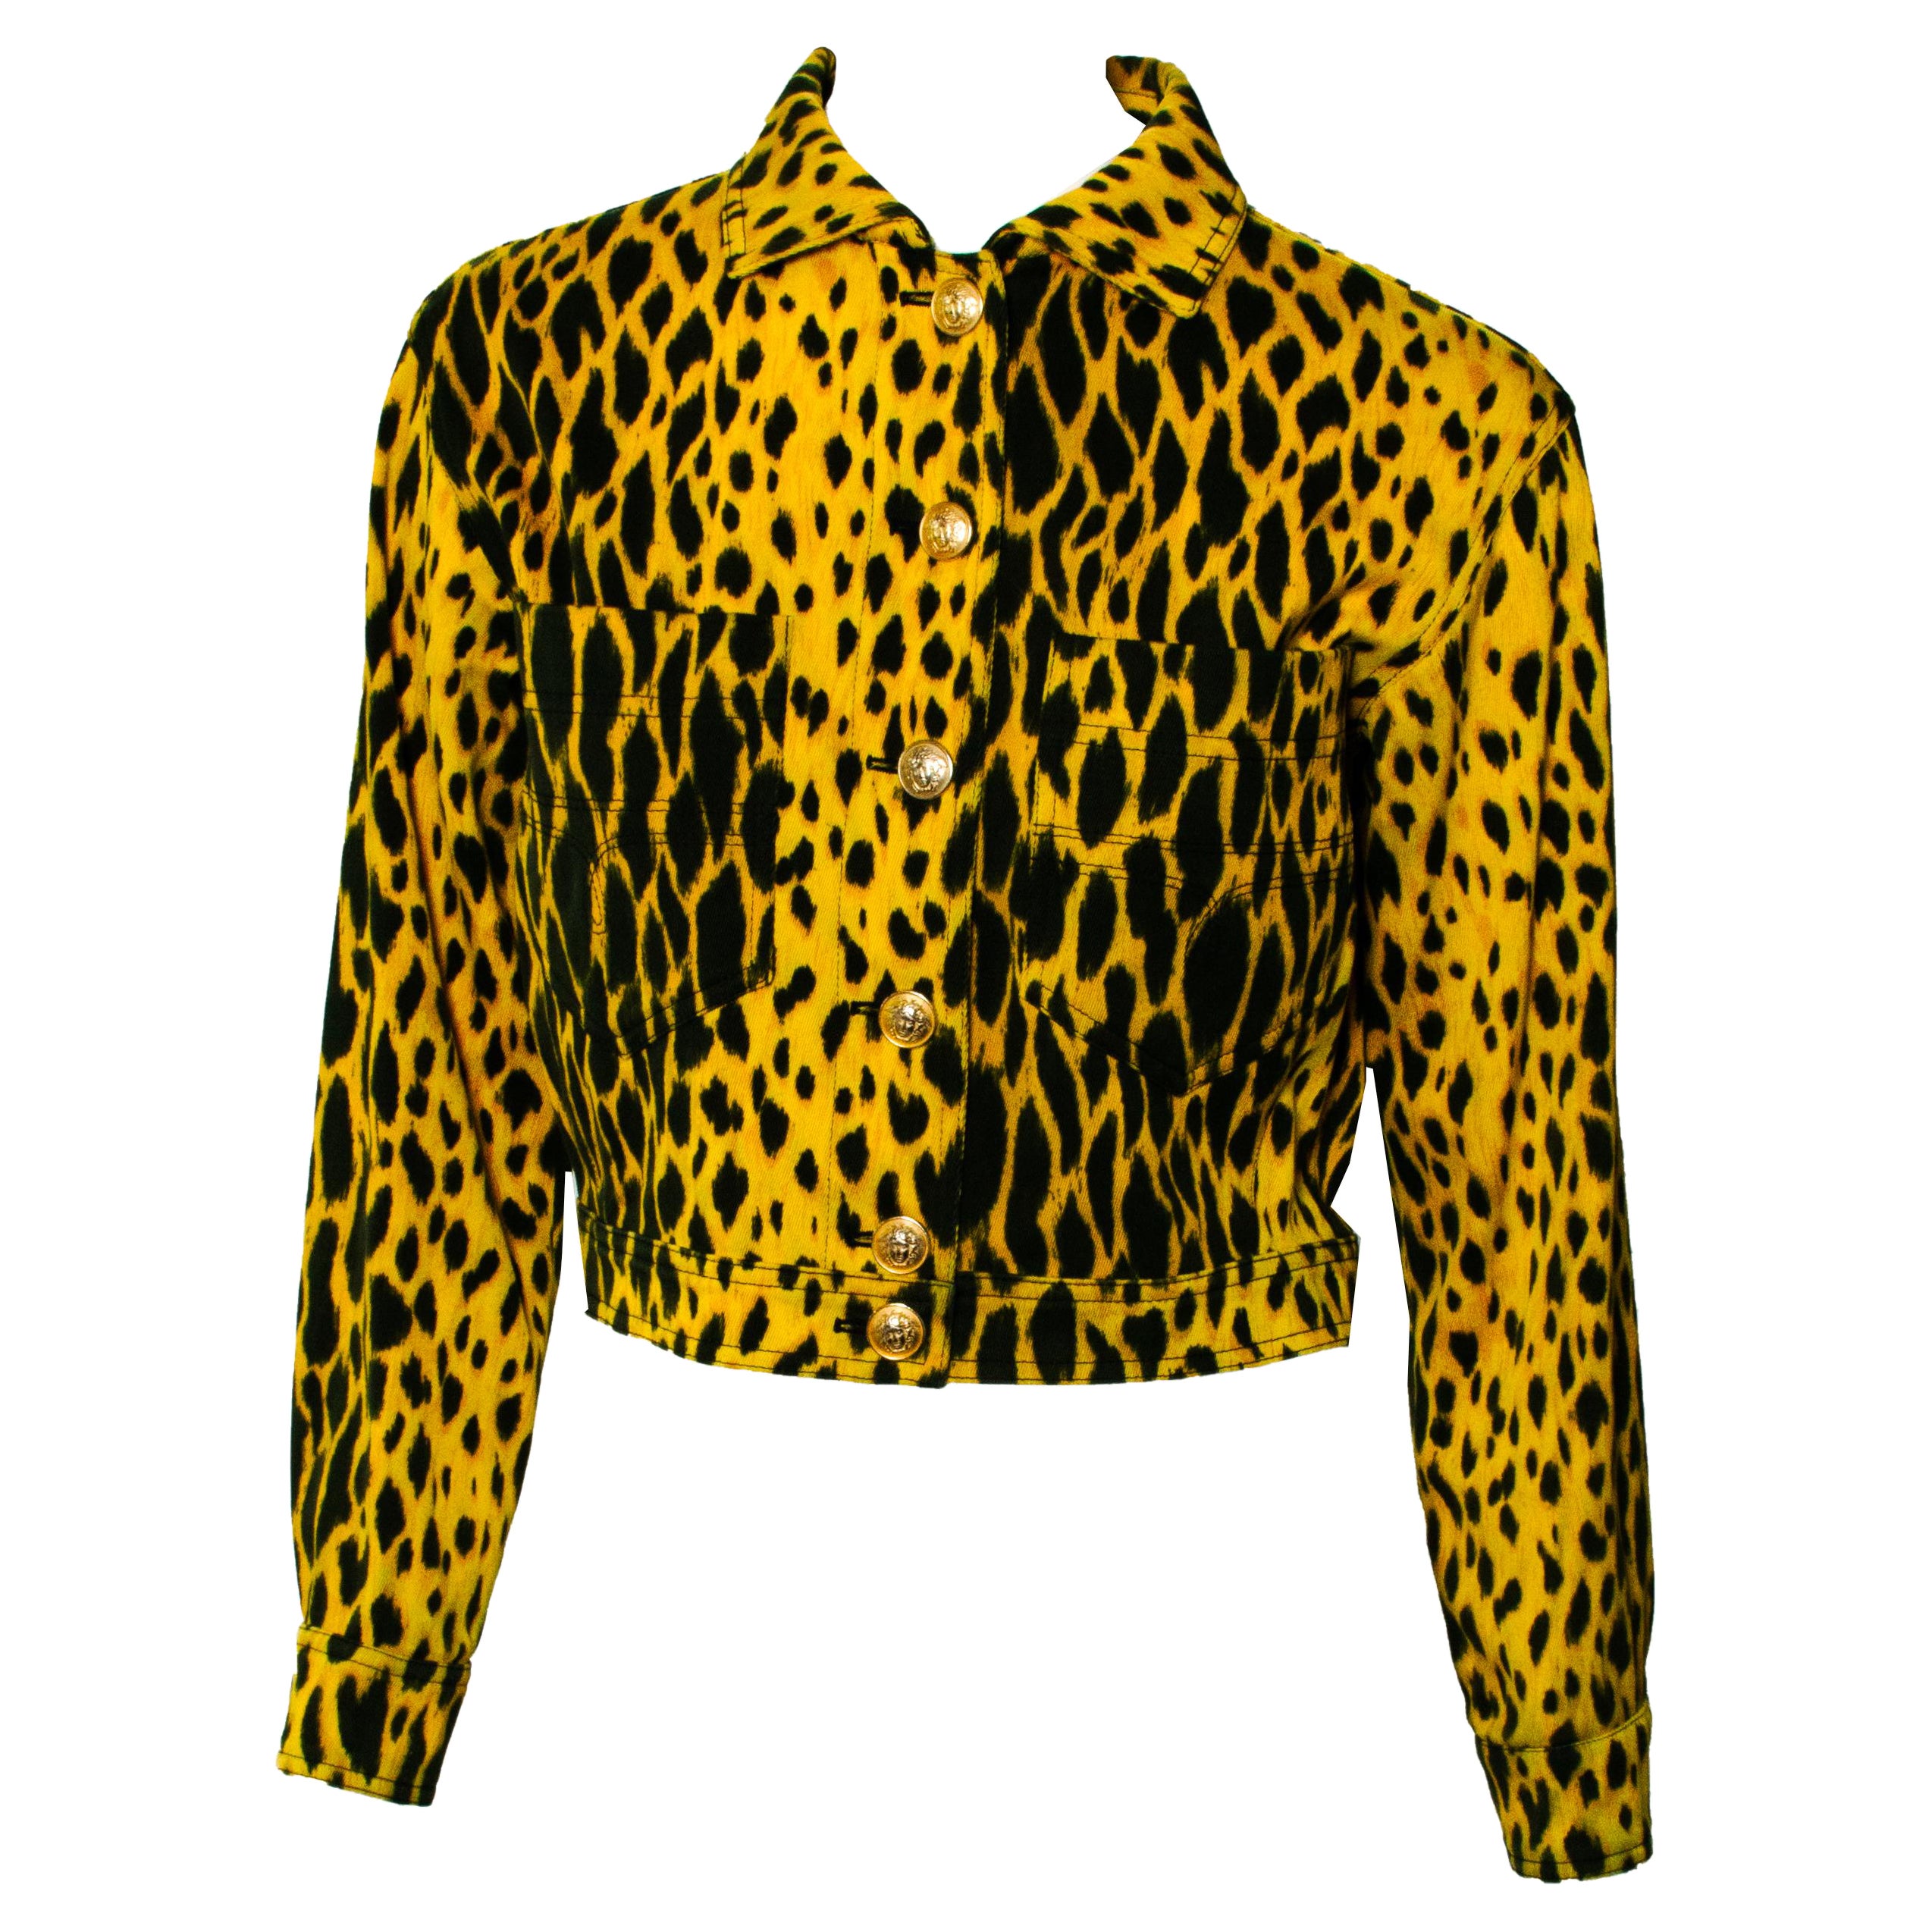 S/S 1992 Gianni Versace Leopard Printed Denim Jacket 